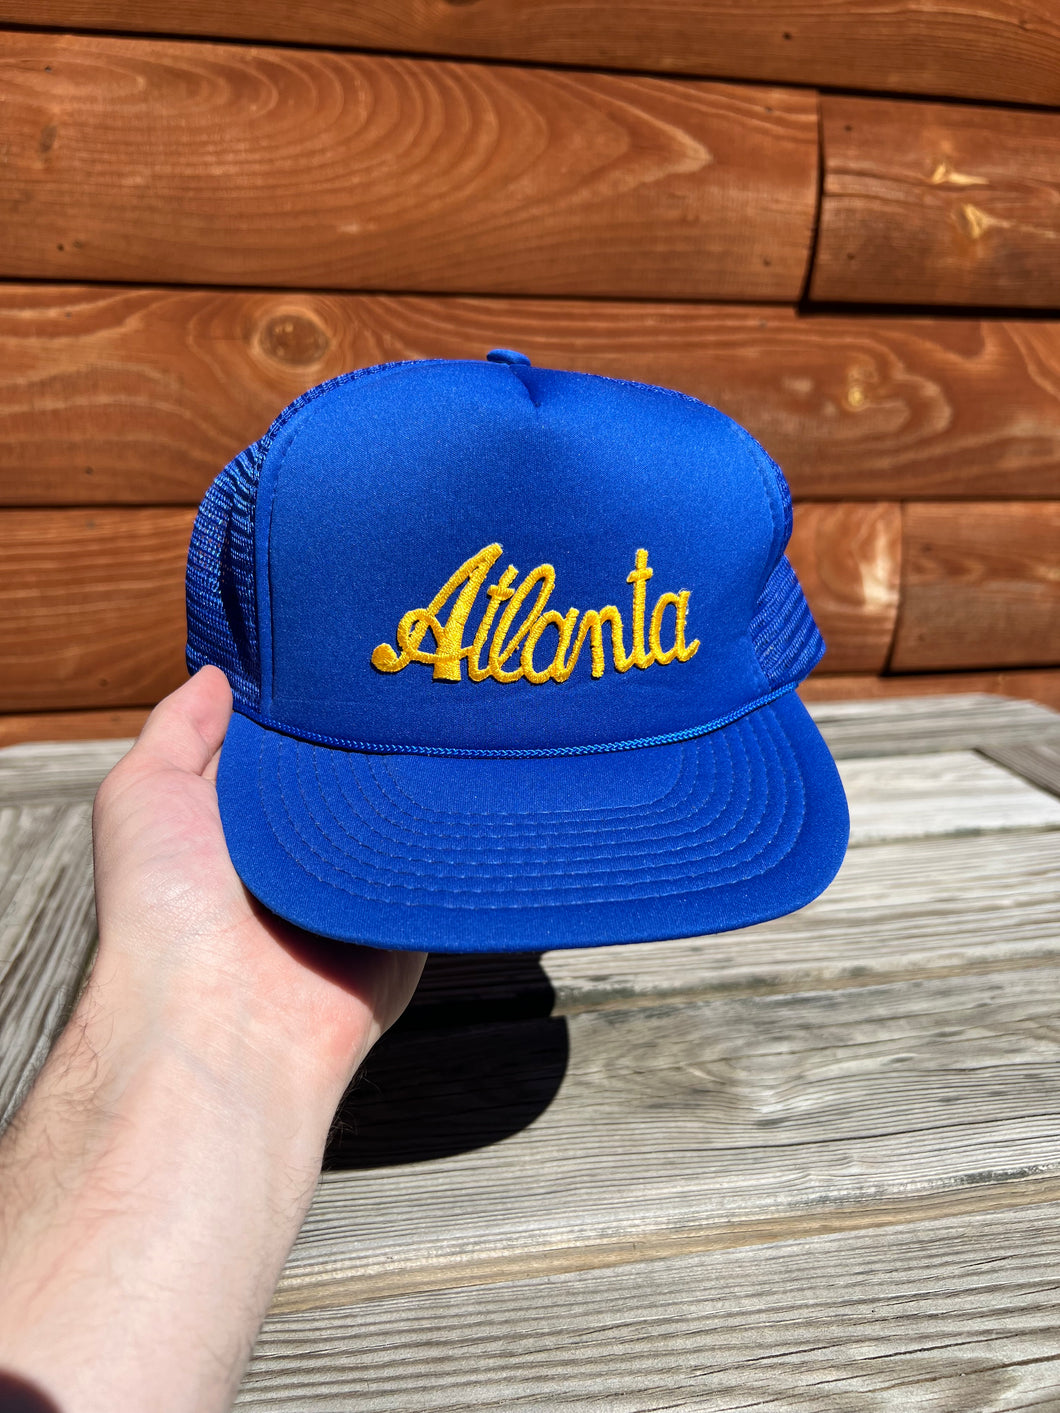 Vintage Atlanta Embroidered Trucker Hat